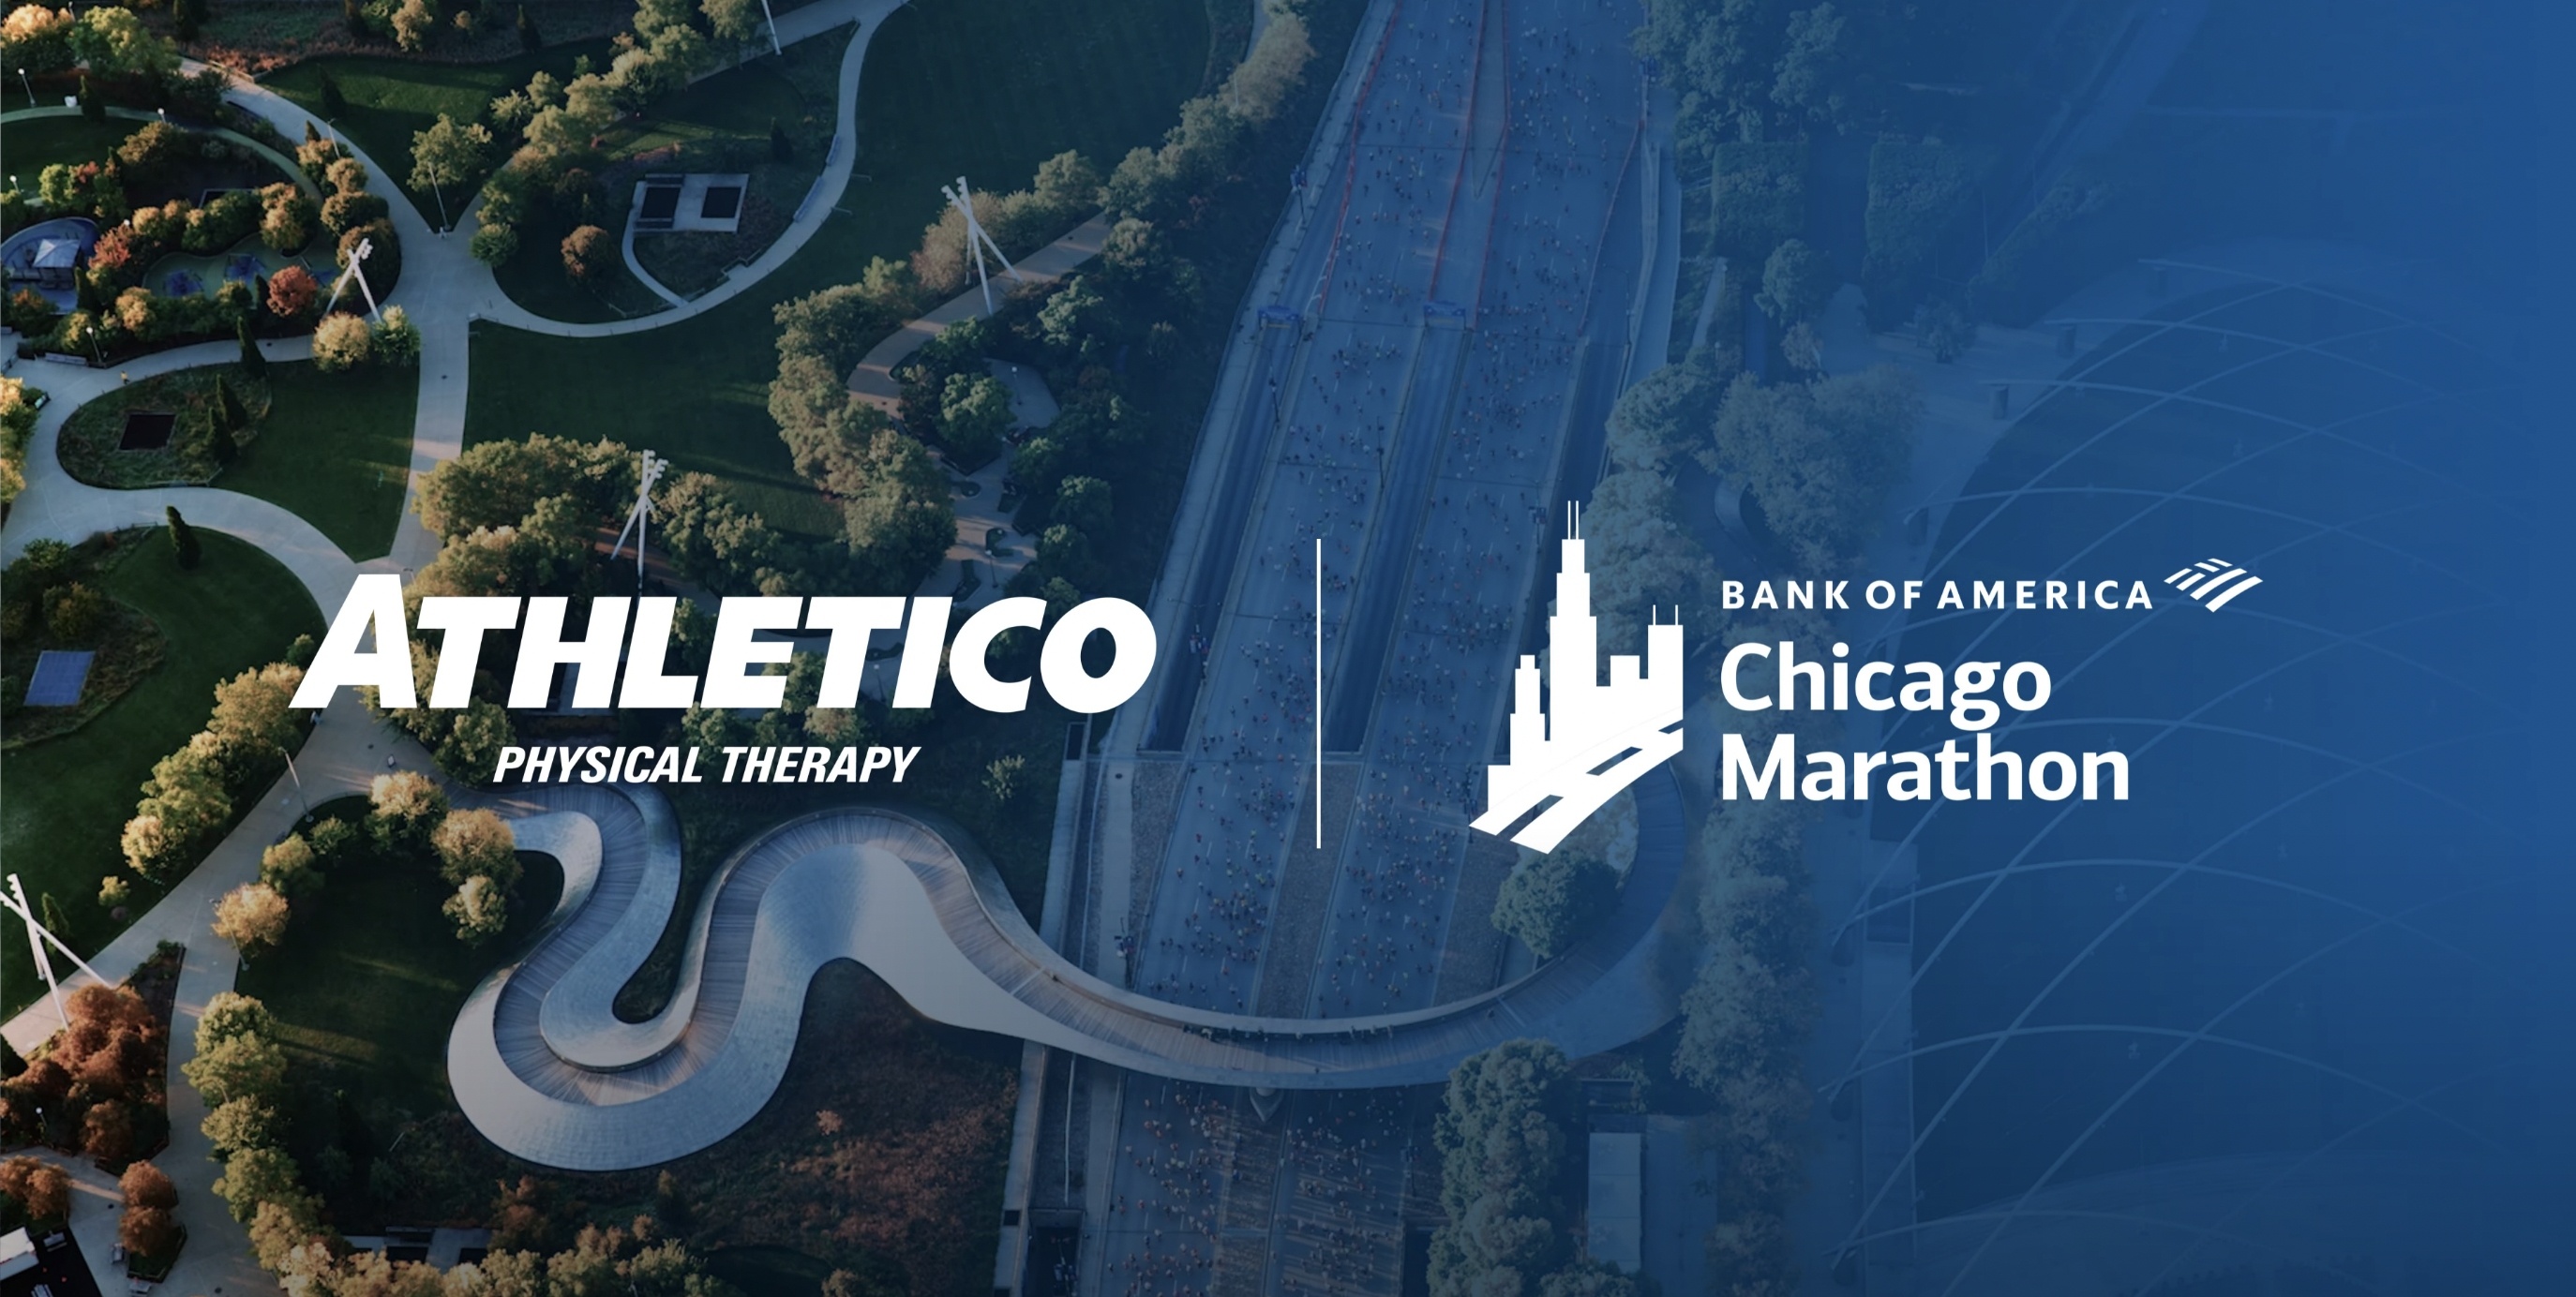 Athletico Physical Therapy / Bank of America Chicago Marathon Partnership